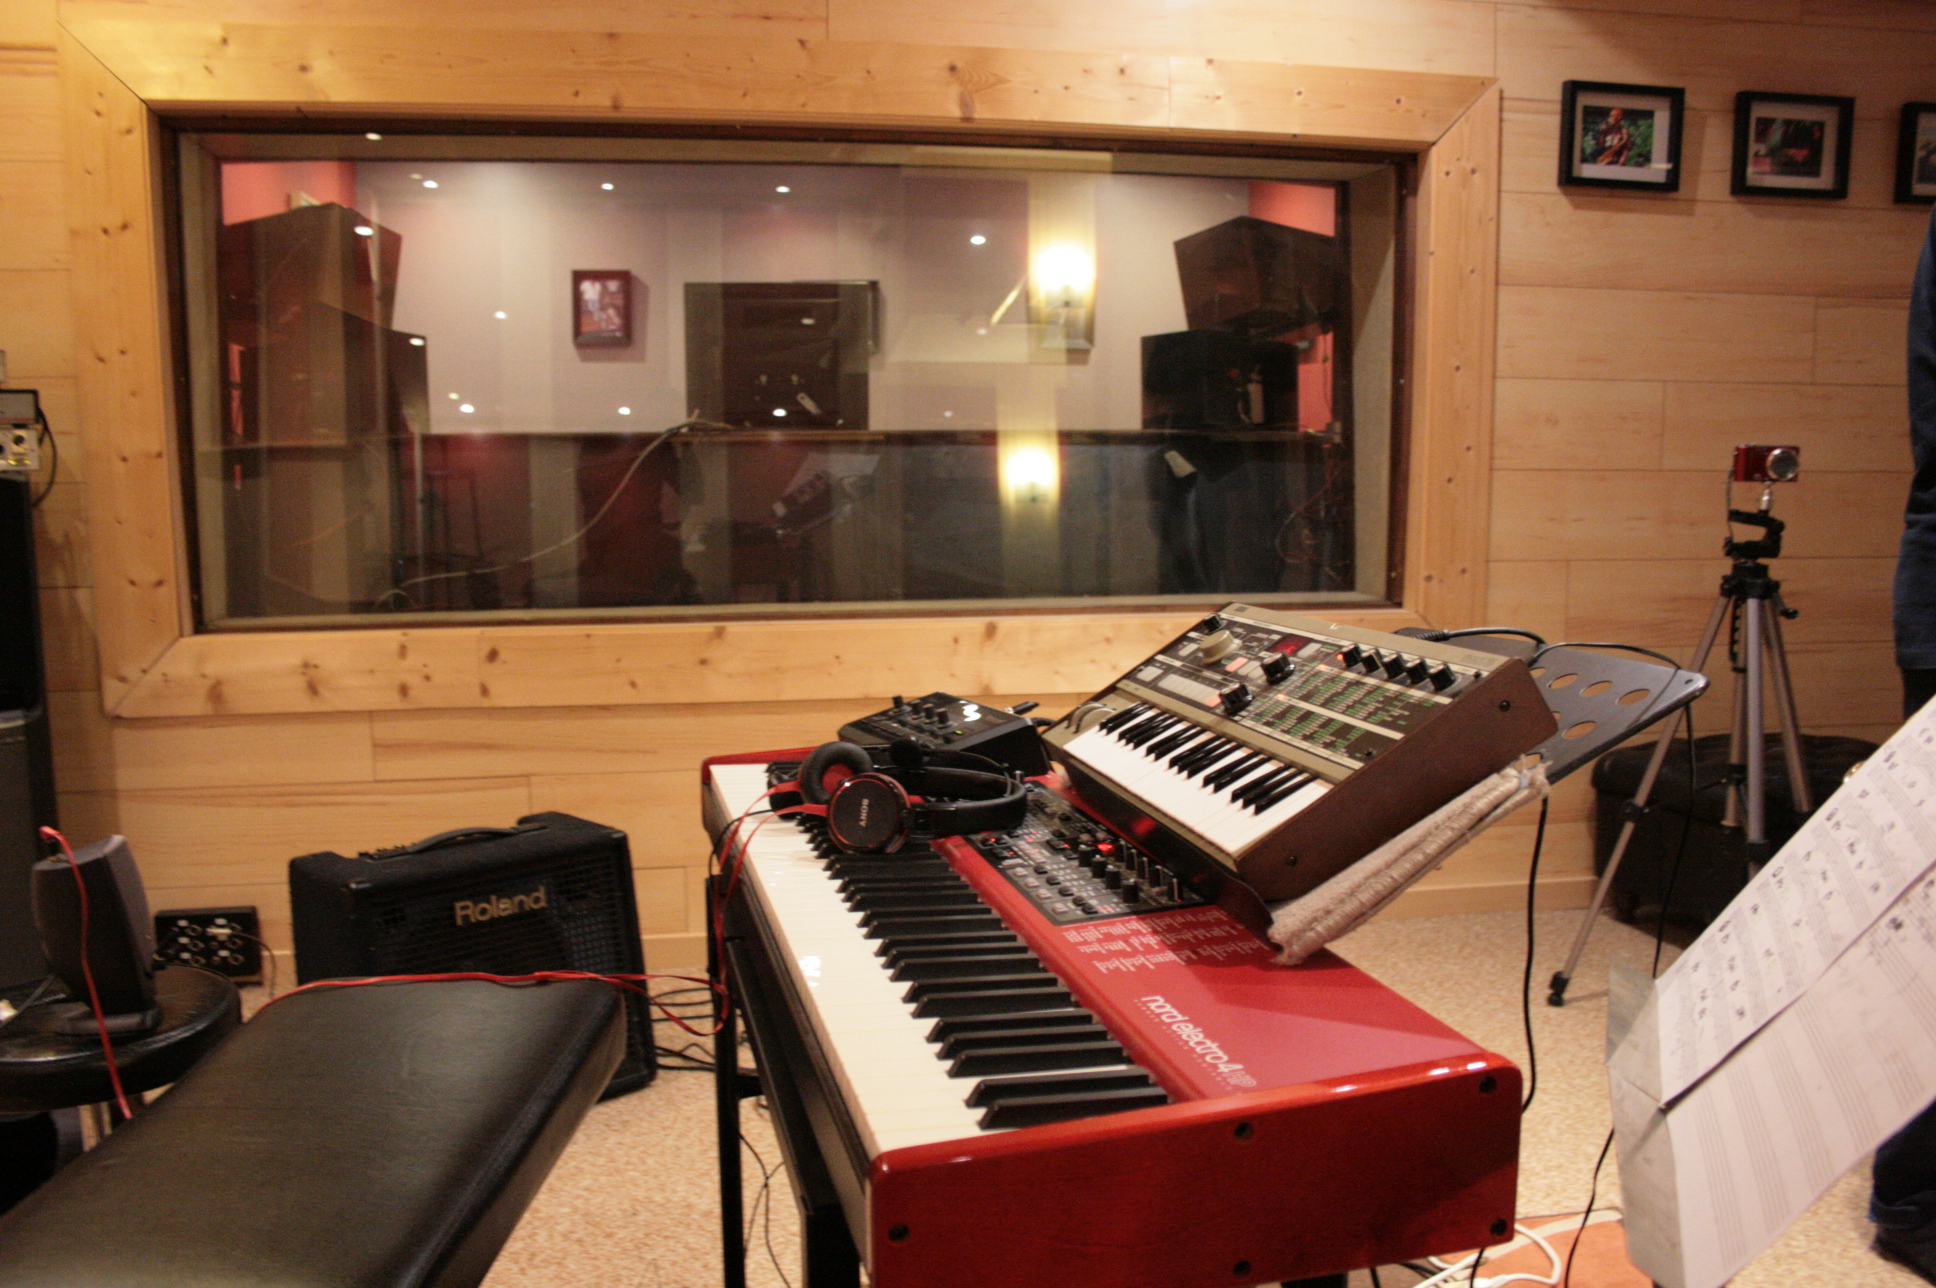  Studio  enregistrement  professionnel musique mixage mastering